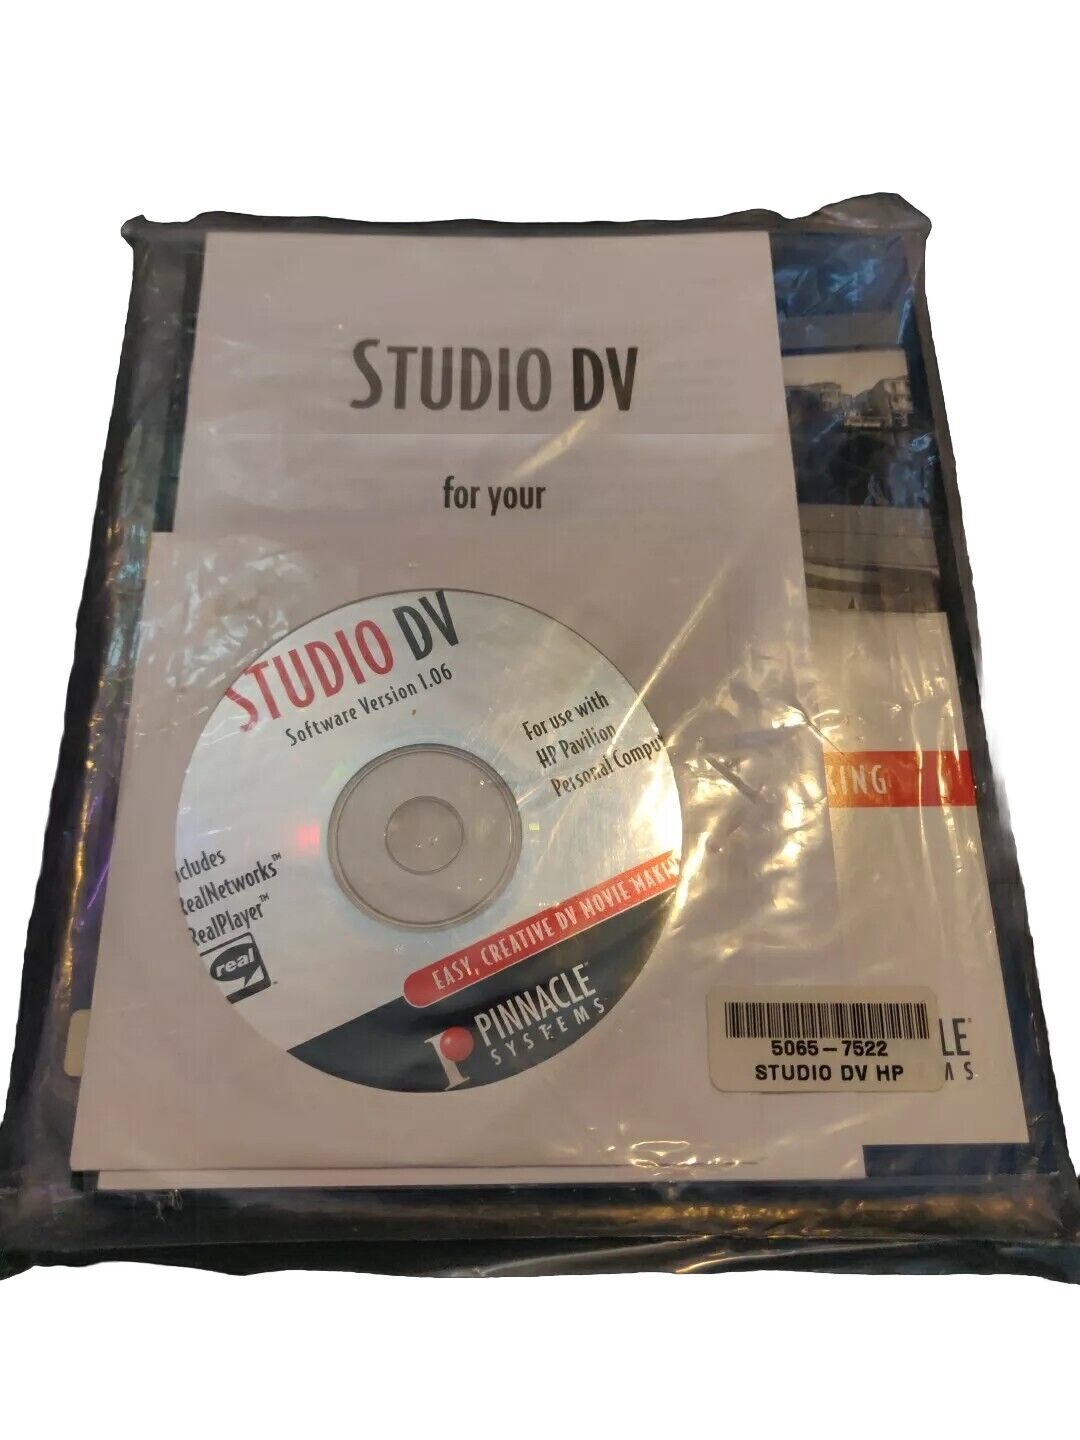 Studio DV Version 1.06 Pinnacle Systems Movie Making VTG CD Software 2000